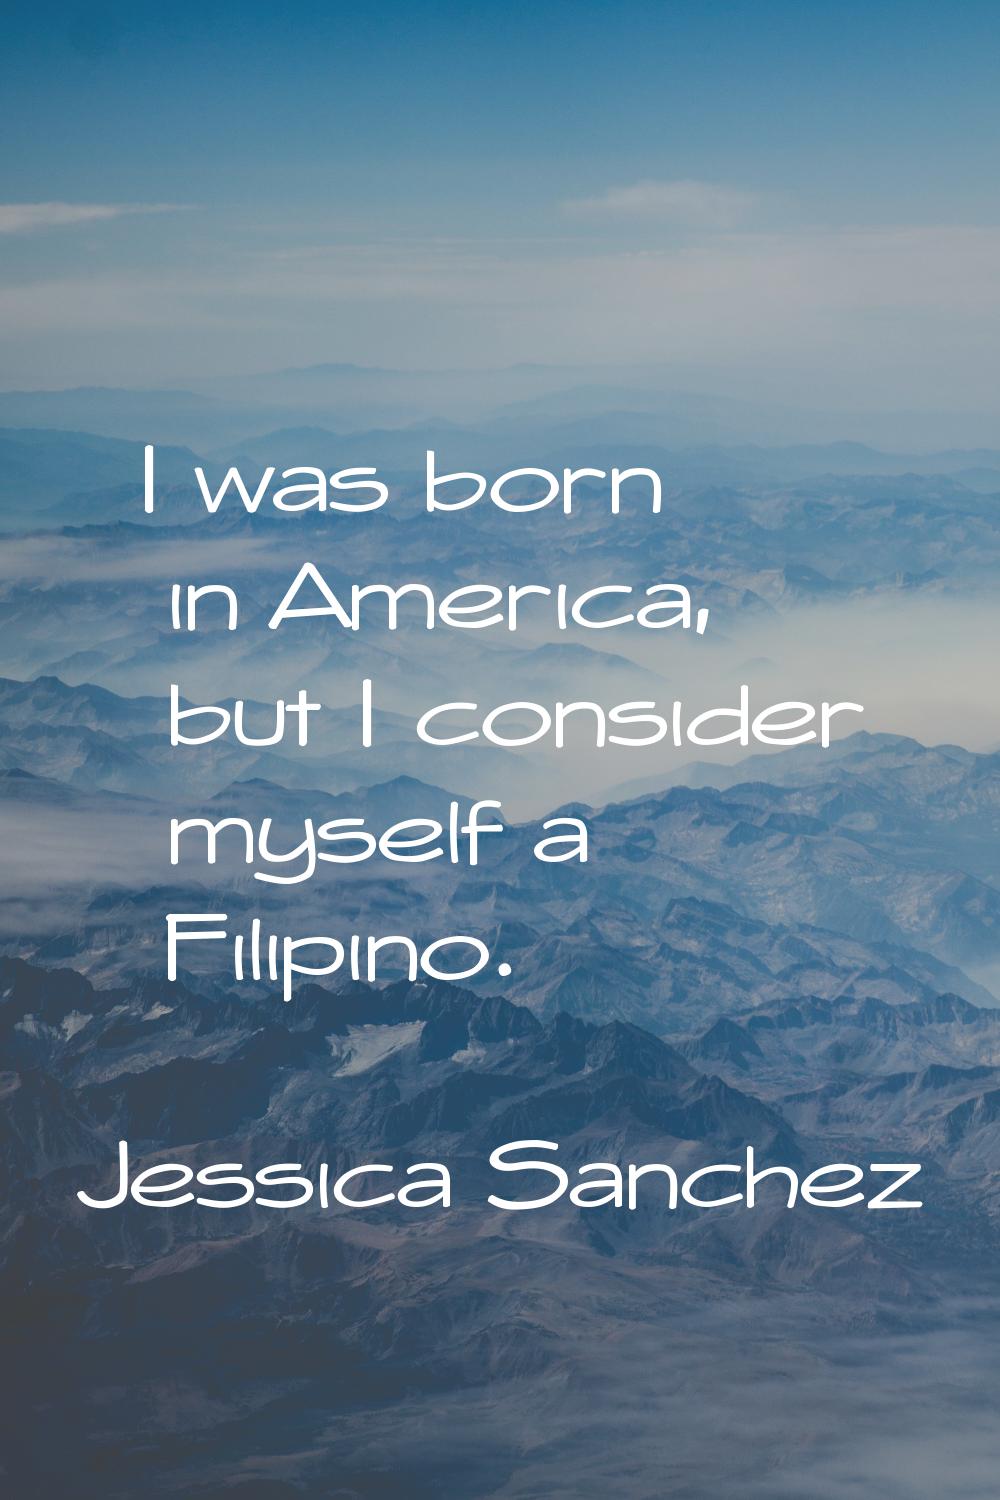 I was born in America, but I consider myself a Filipino.